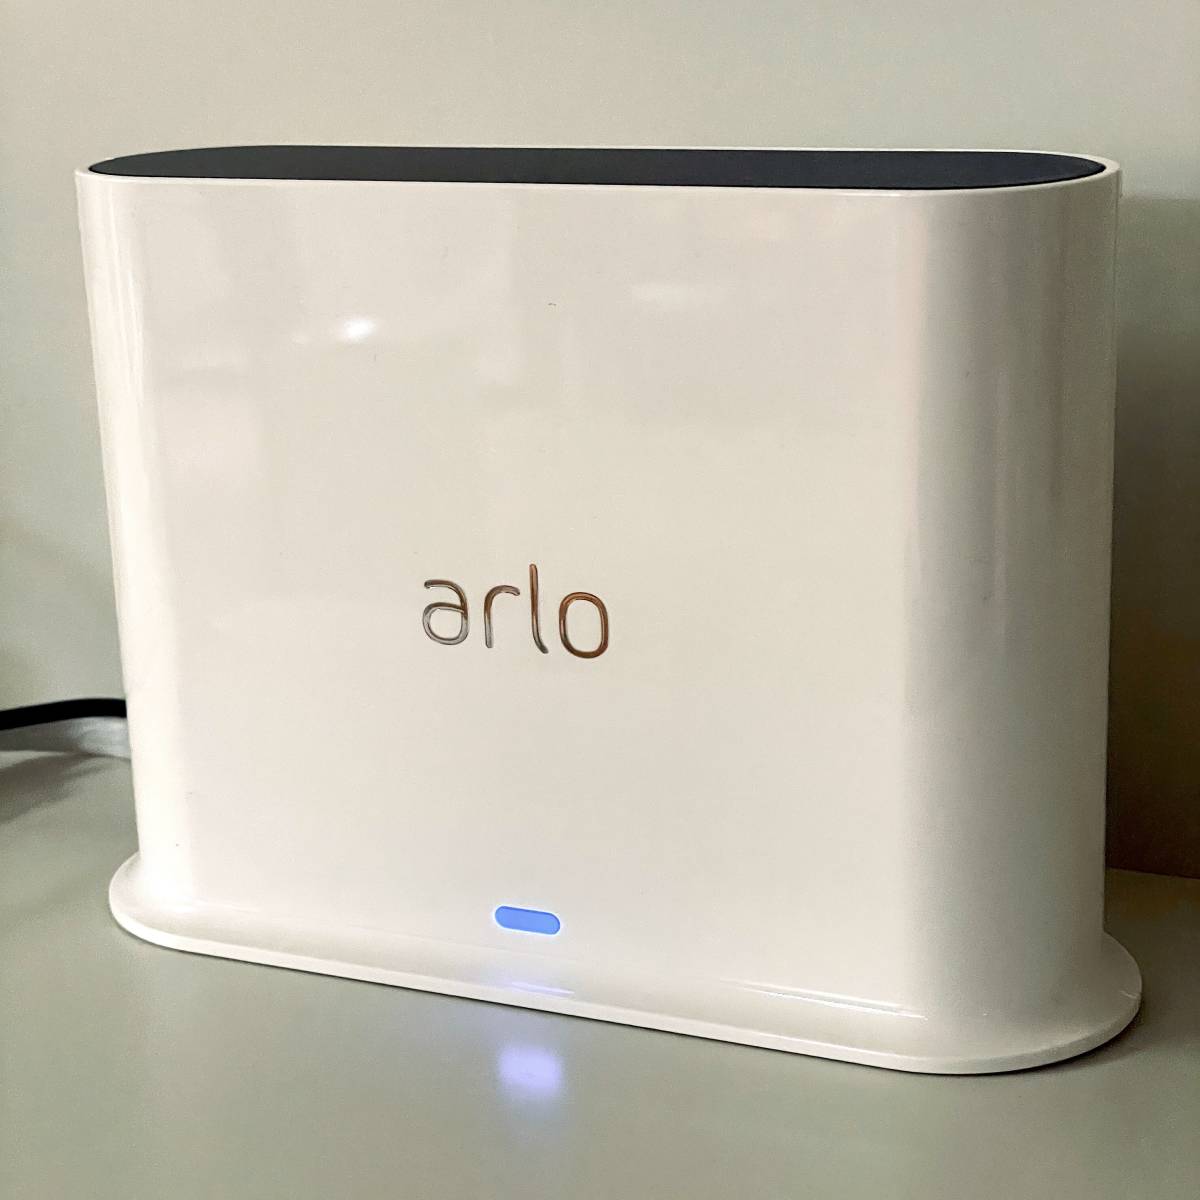 Arloa-ro wireless security camera for base station VMB4500